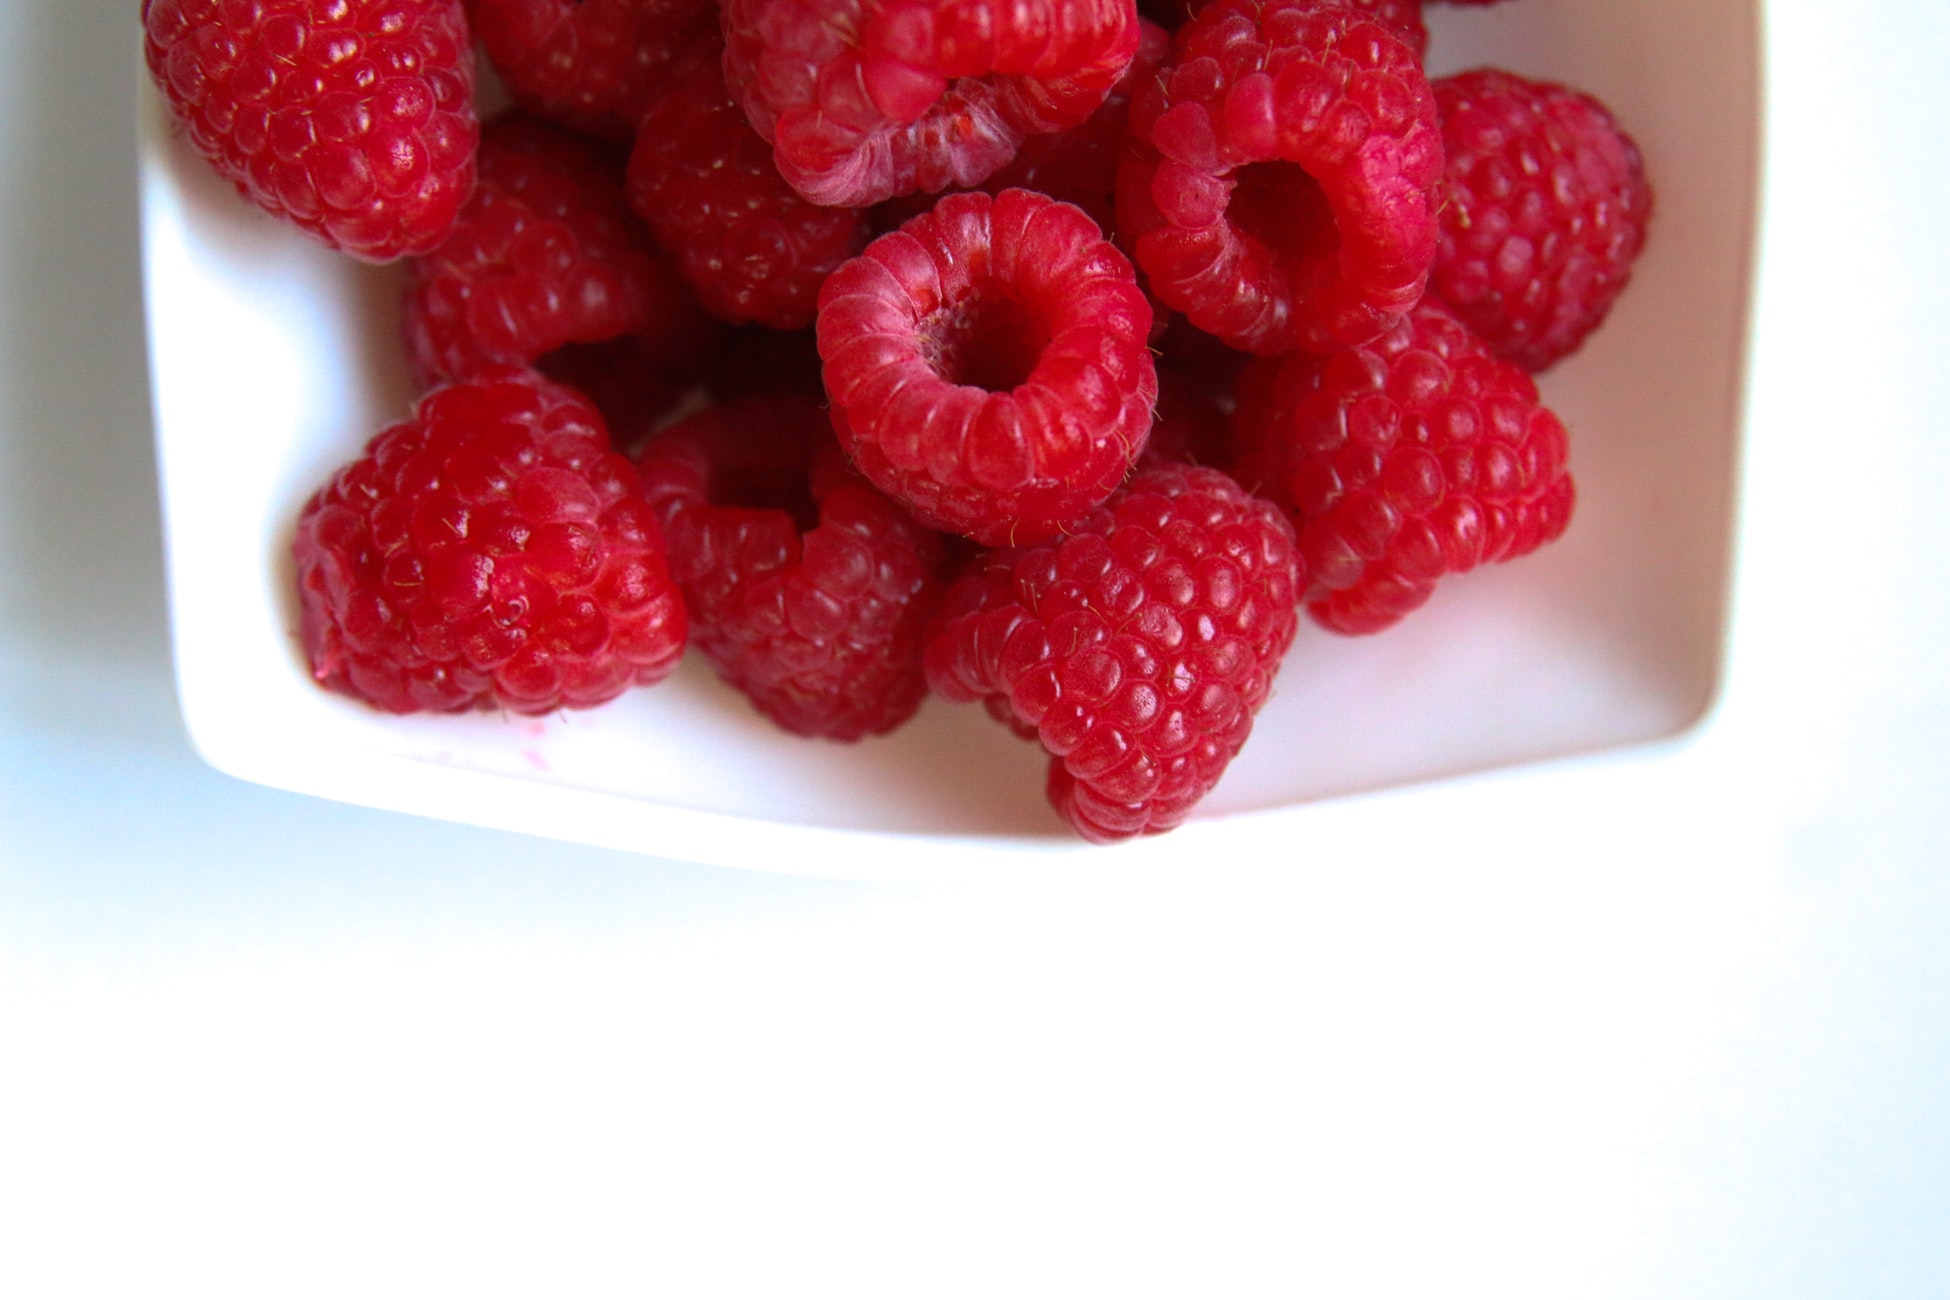 Raspberries in a Bowl